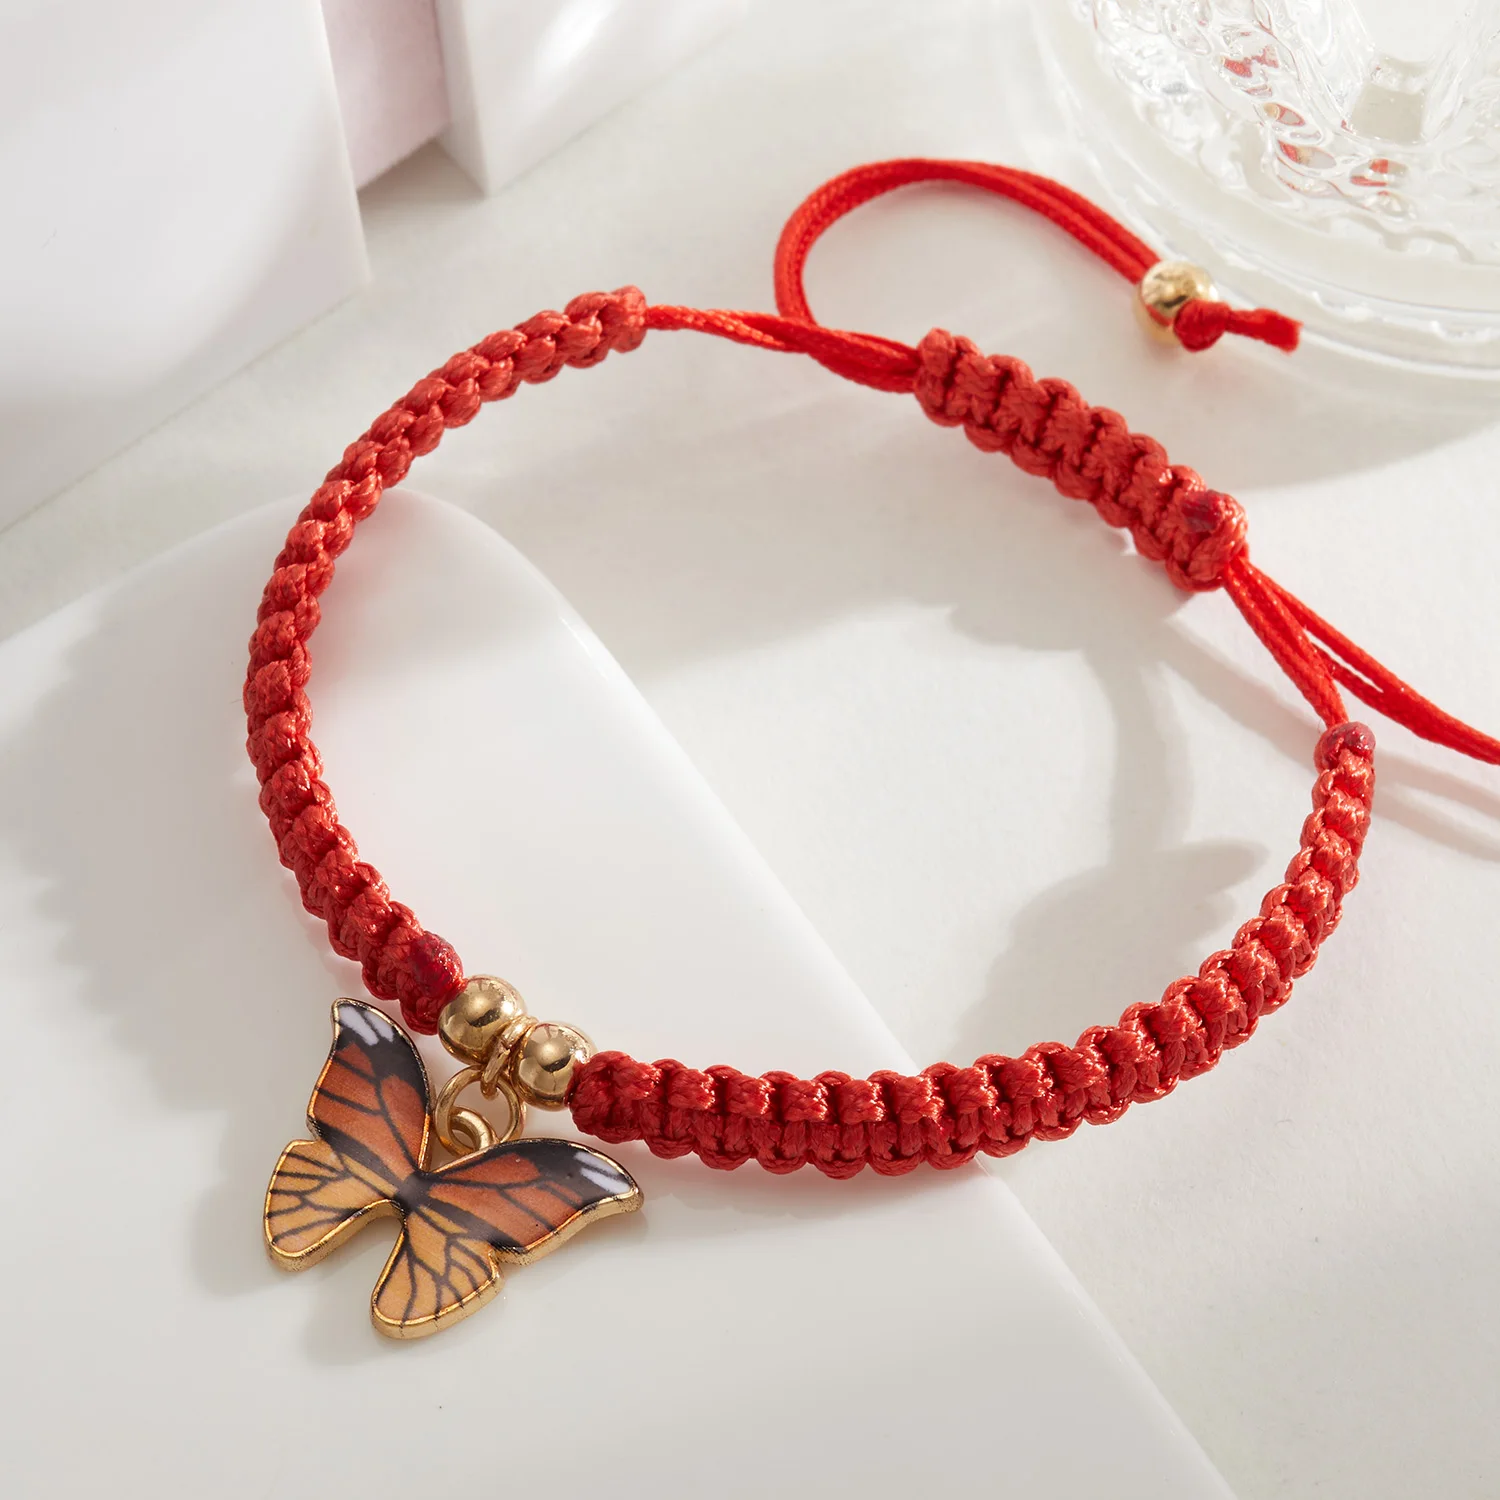 Gyouwnll Hand Woven Butterfly Pendant Bracelet Adjustable New Year Red Rope  Bracelet Bracelet With Red Rope Butterfly Pendant